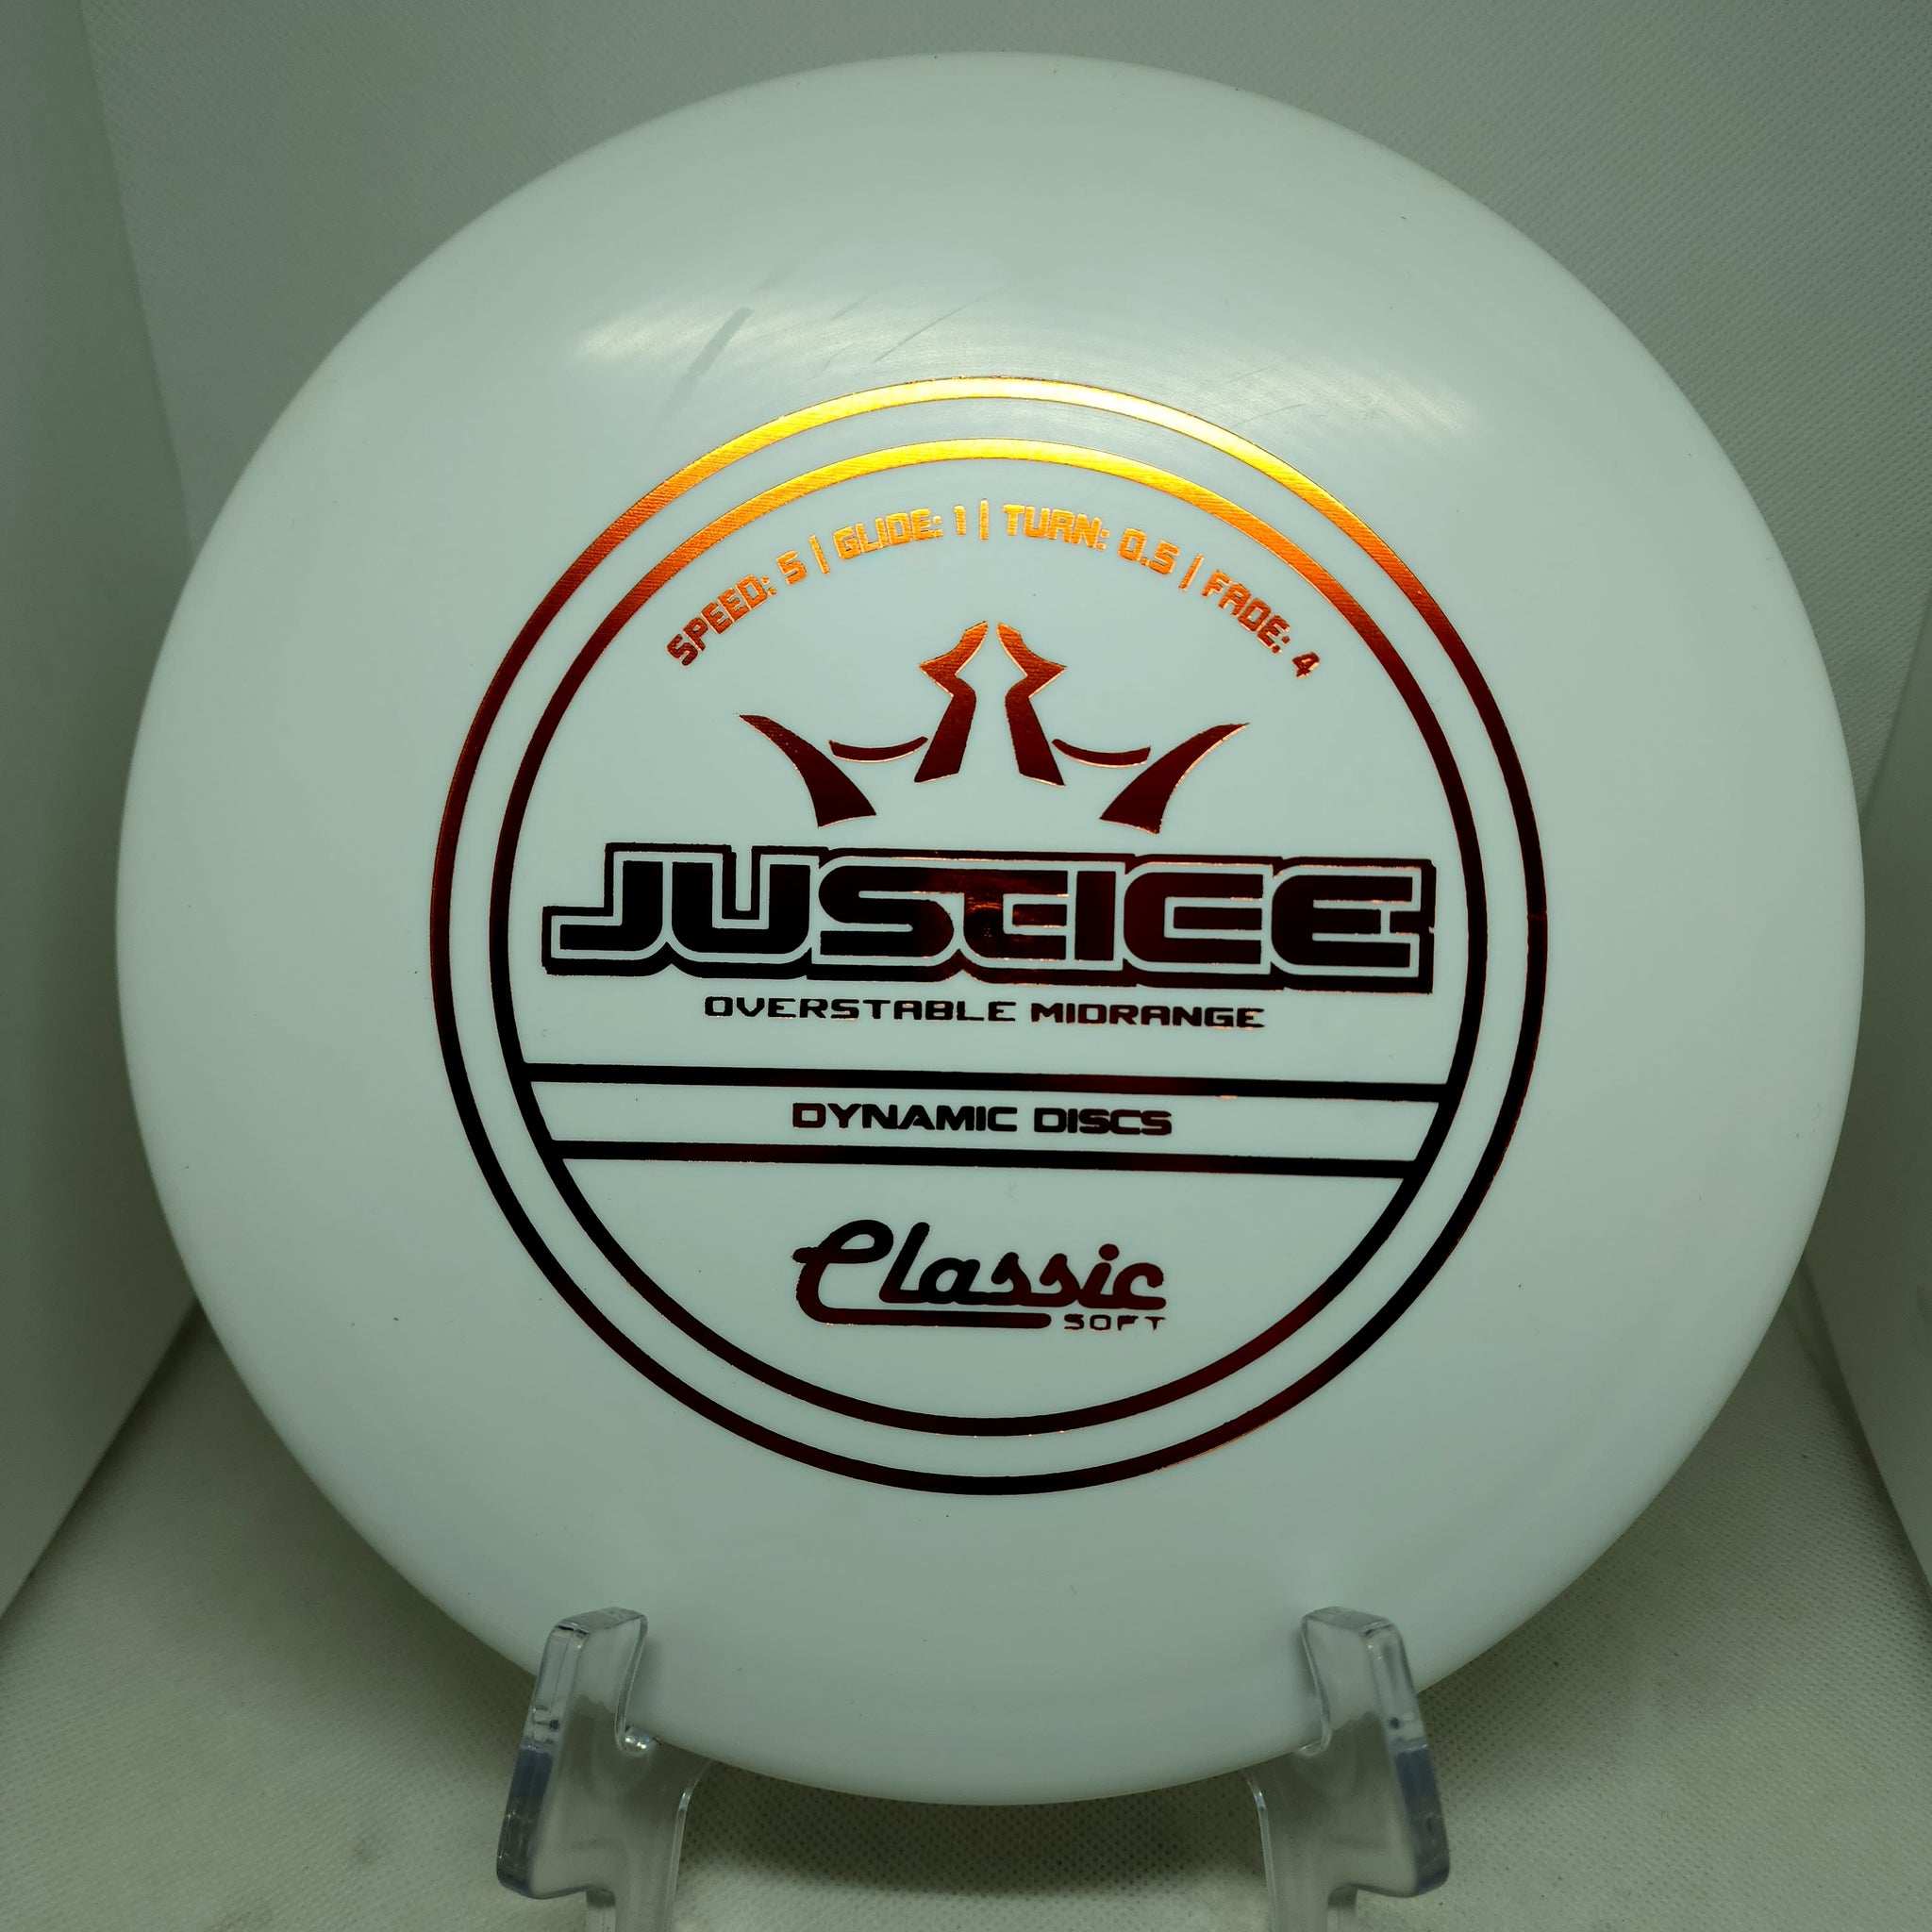 Justice (Classic Soft)